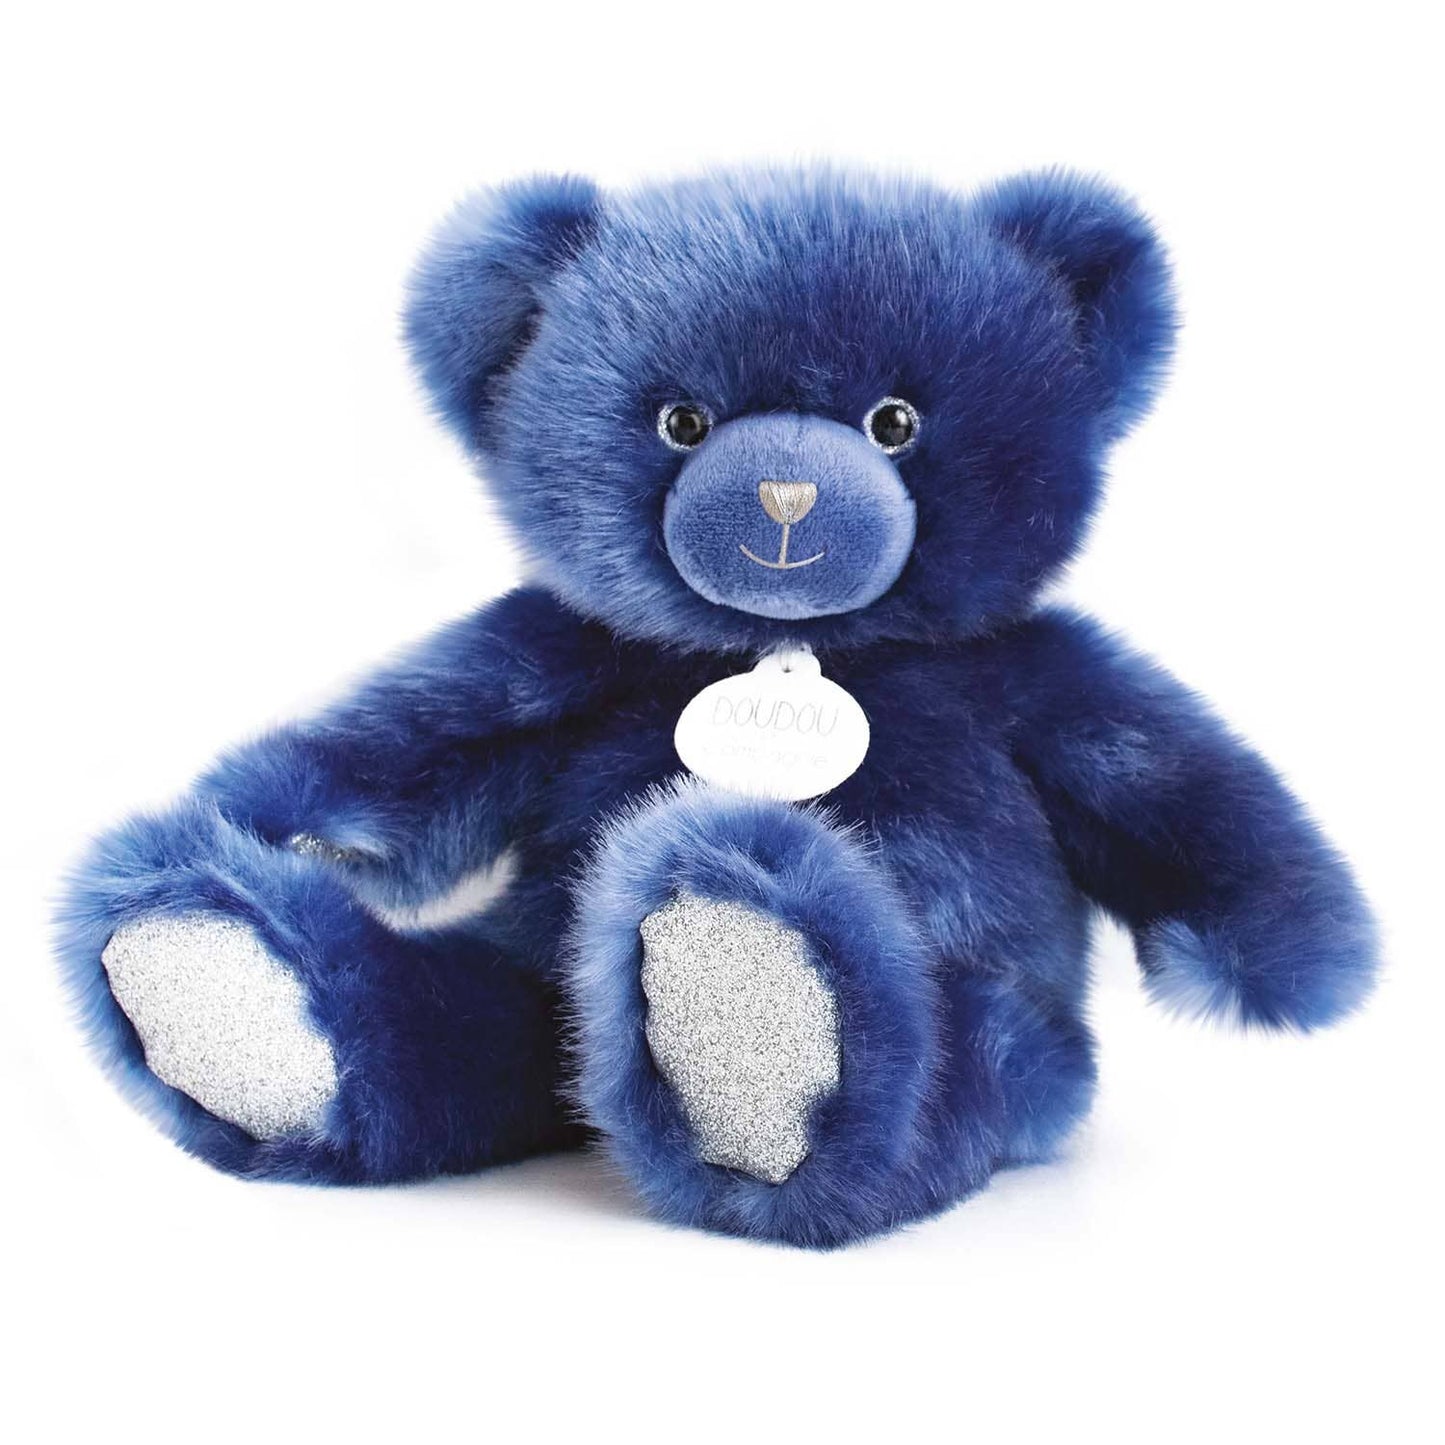 Classic Plush Stuffed Animal Teddy Bear